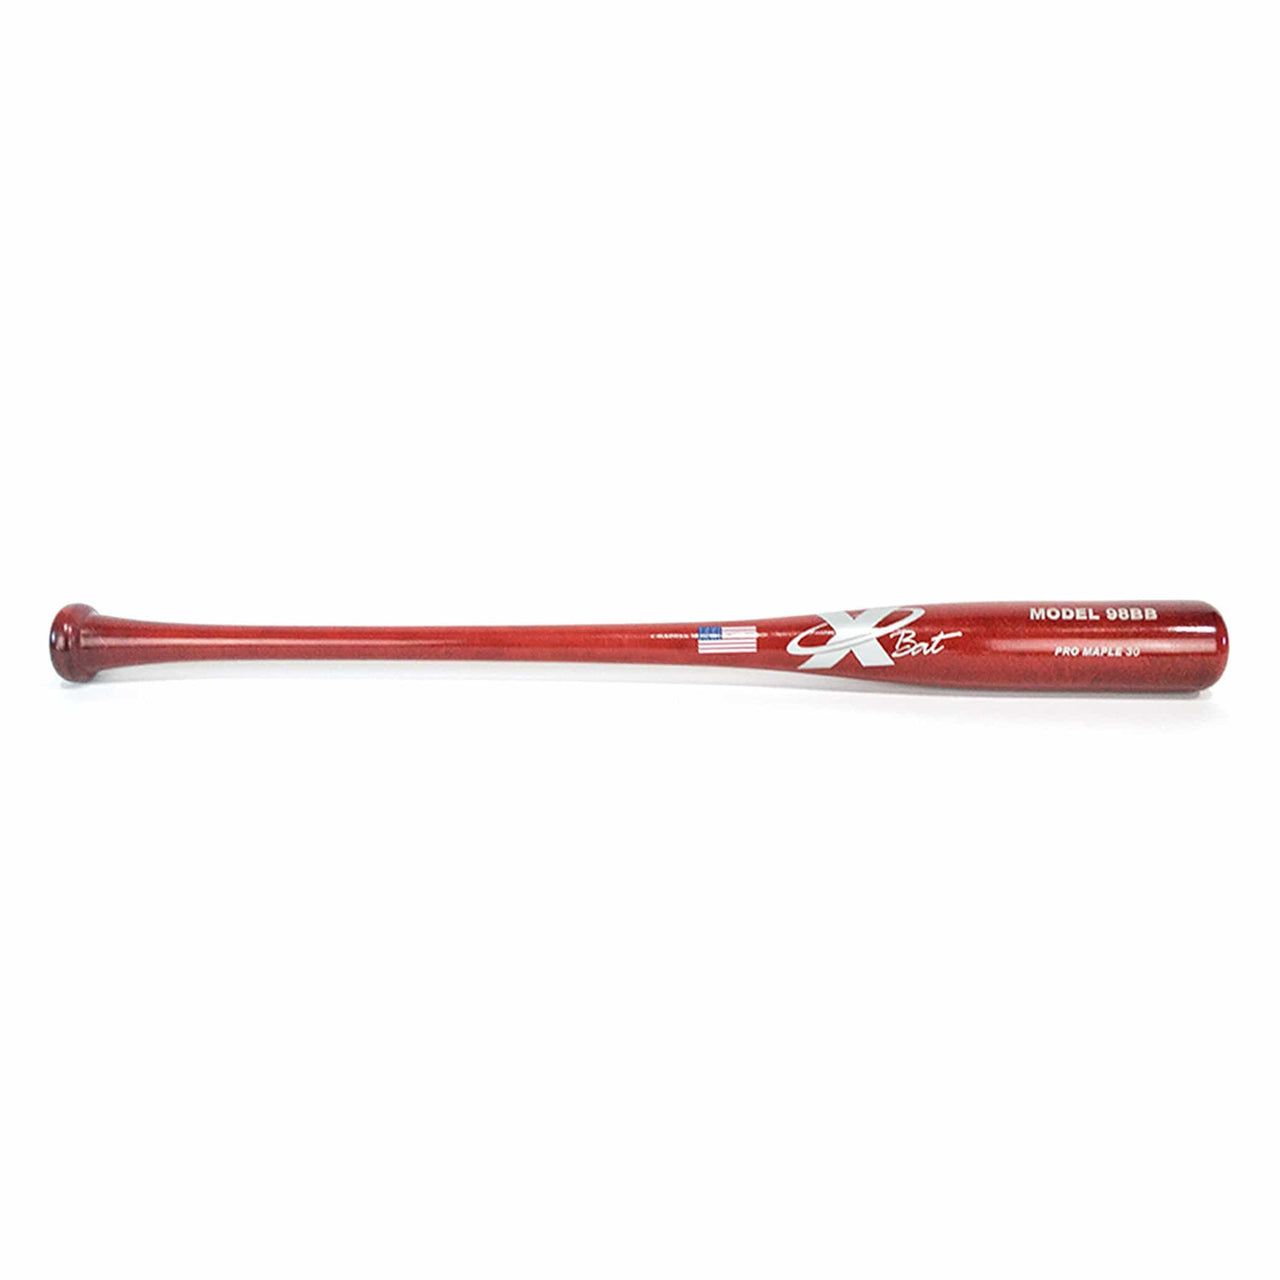 X-Bat Playing Bats Red | Silver / 30" / (-3) X-Bat Model 98BB Wood Baseball Bat | Maple